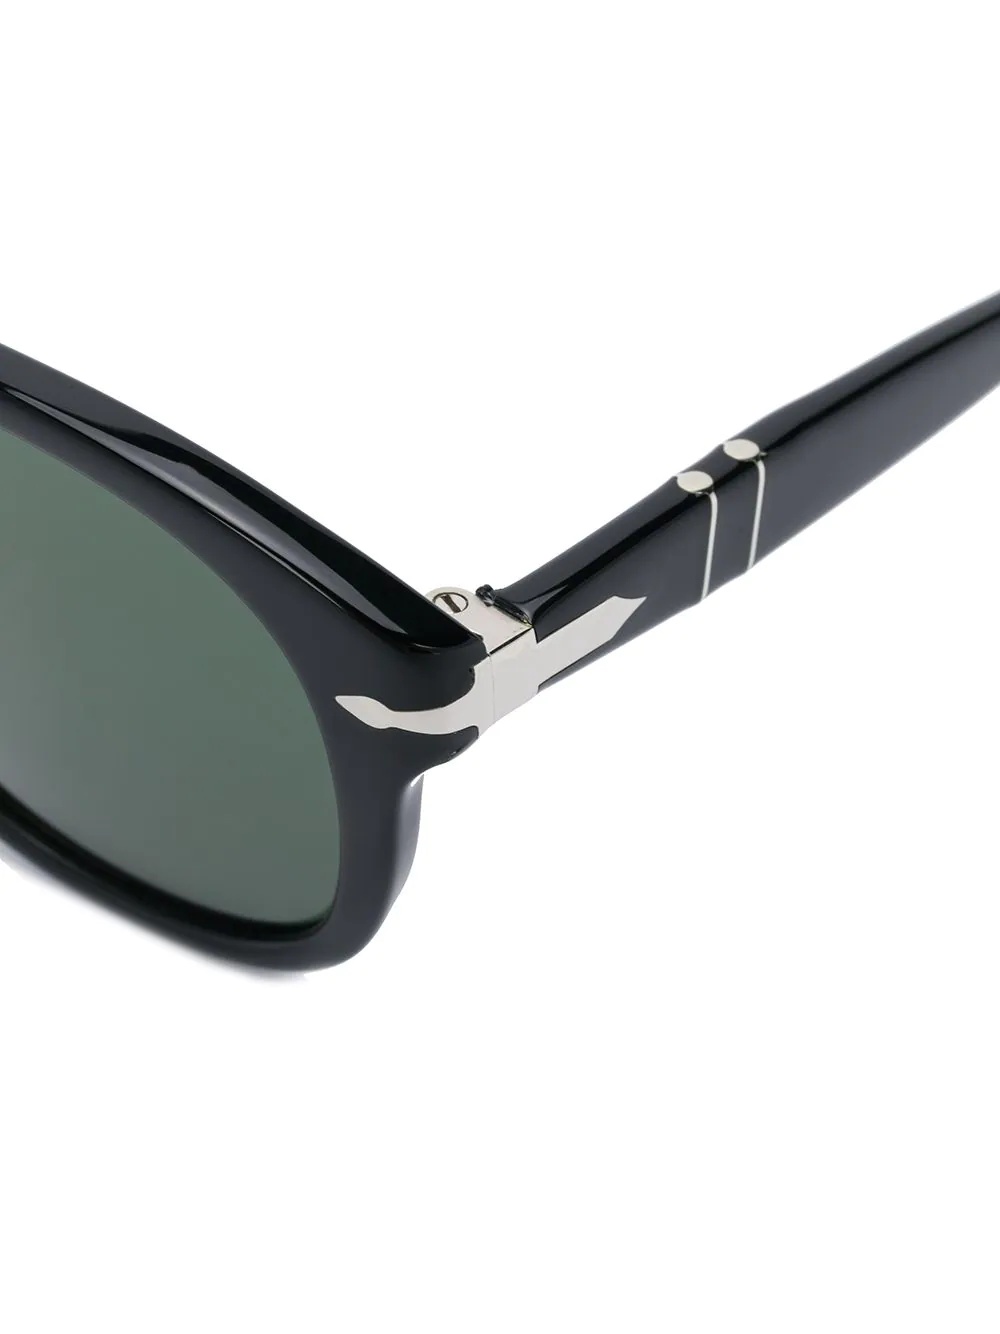 aviator-style sunglasses - 3